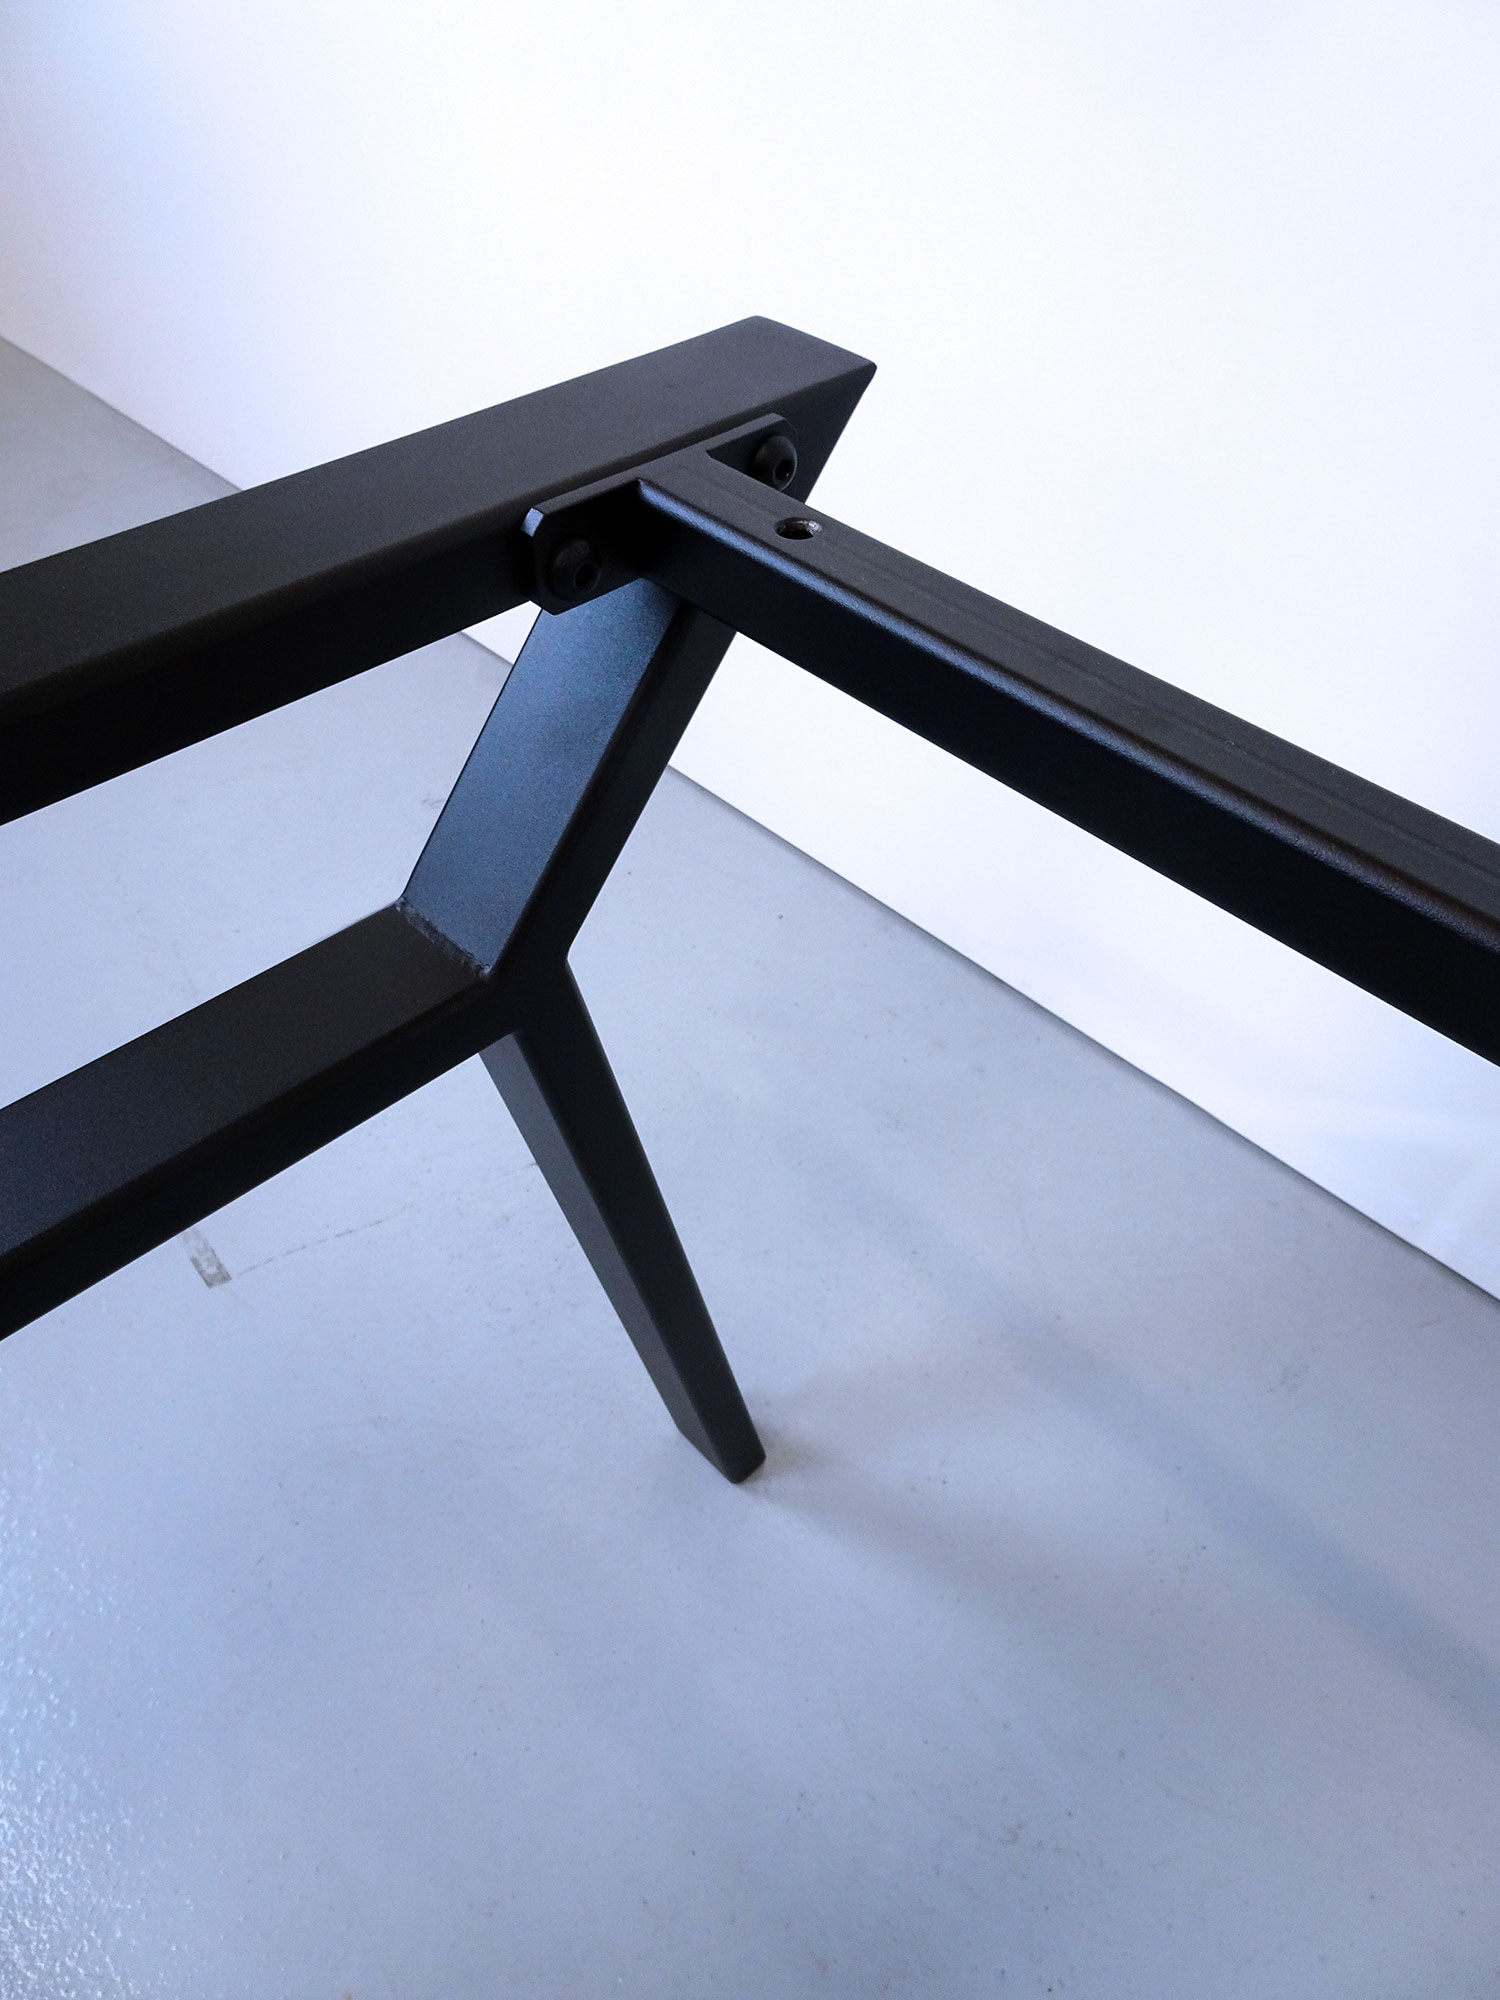 ARTMETA / Pied de table Hameau sur mesure en acier